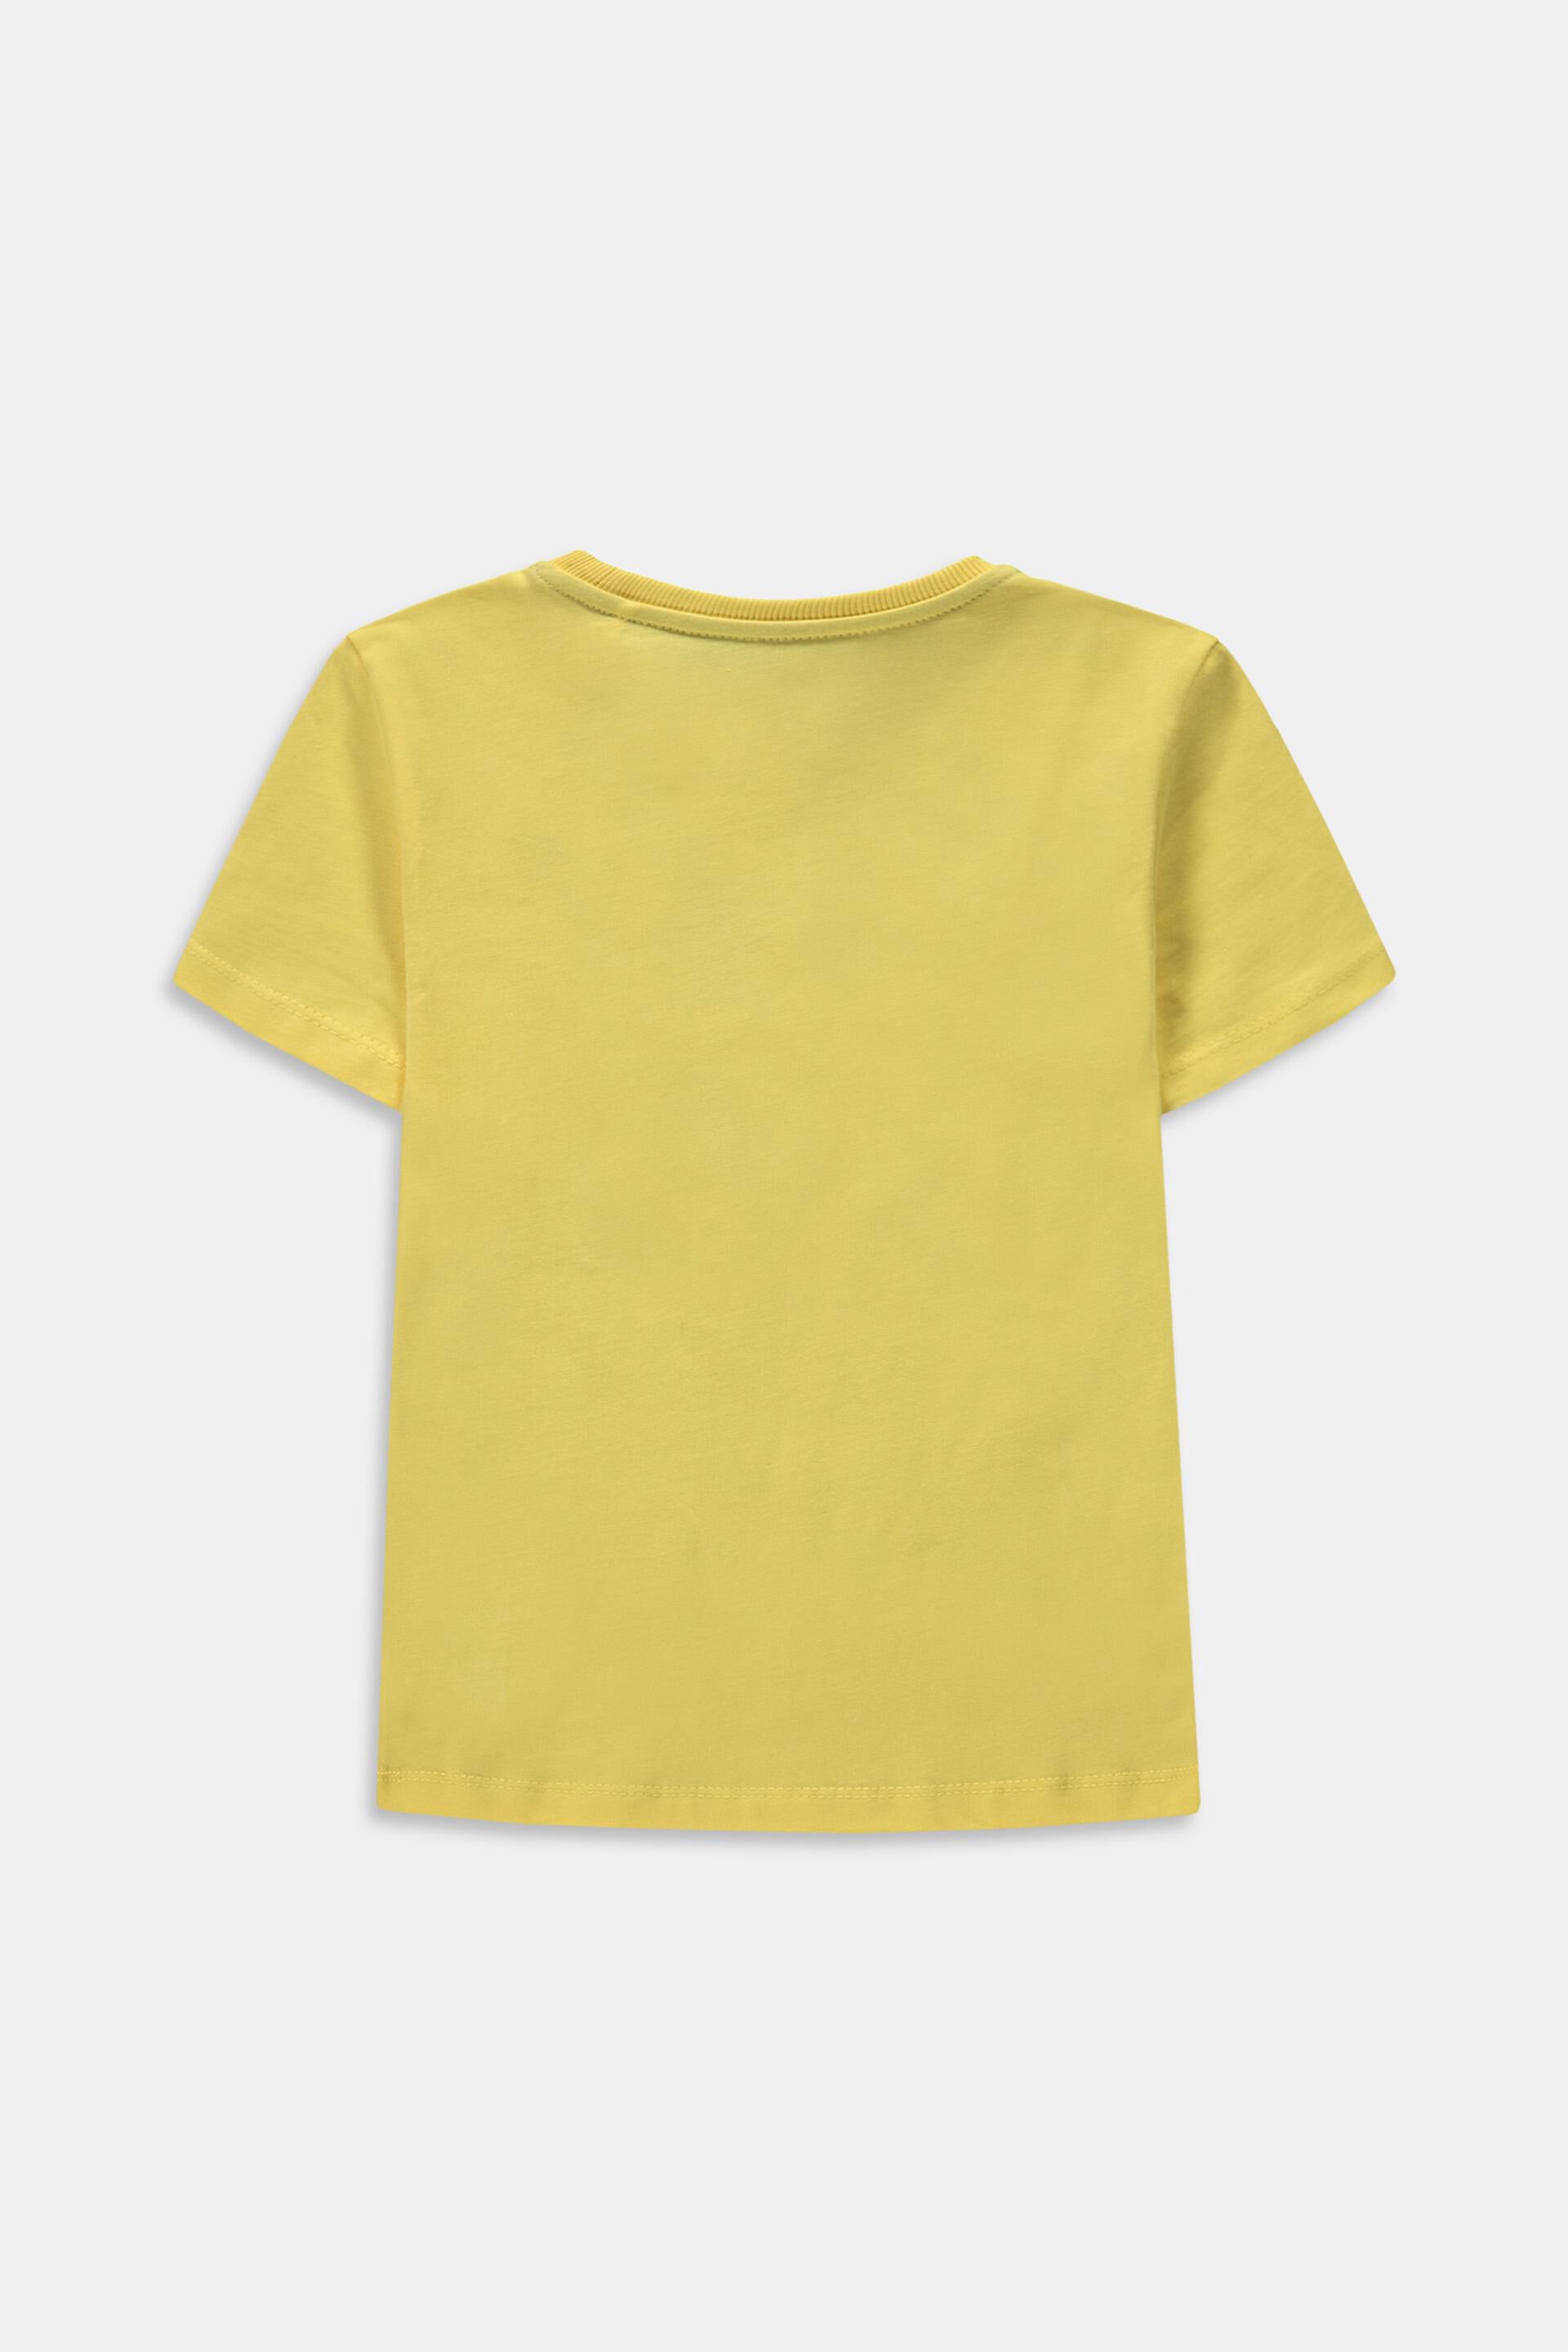 KINDER Hemden & T-Shirts Rüschen Rabatt 69 % Violett 6-9M NoName T-Shirt 